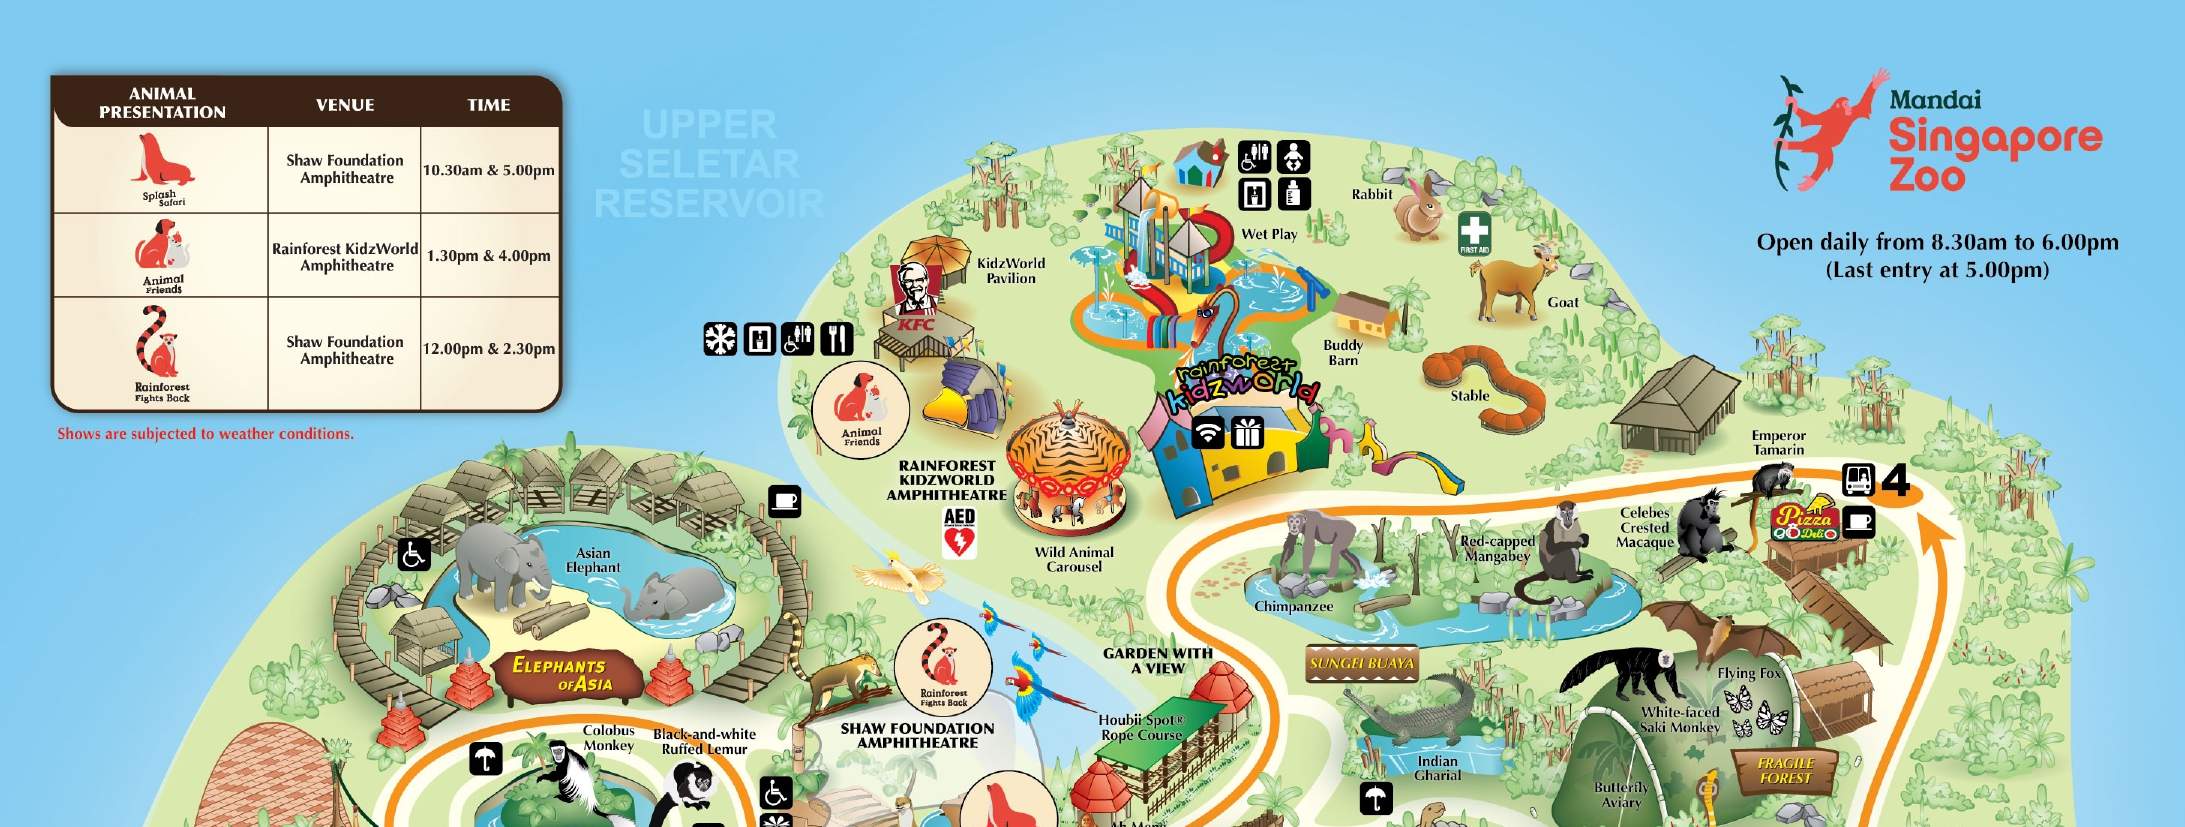 singapore zoo map in english